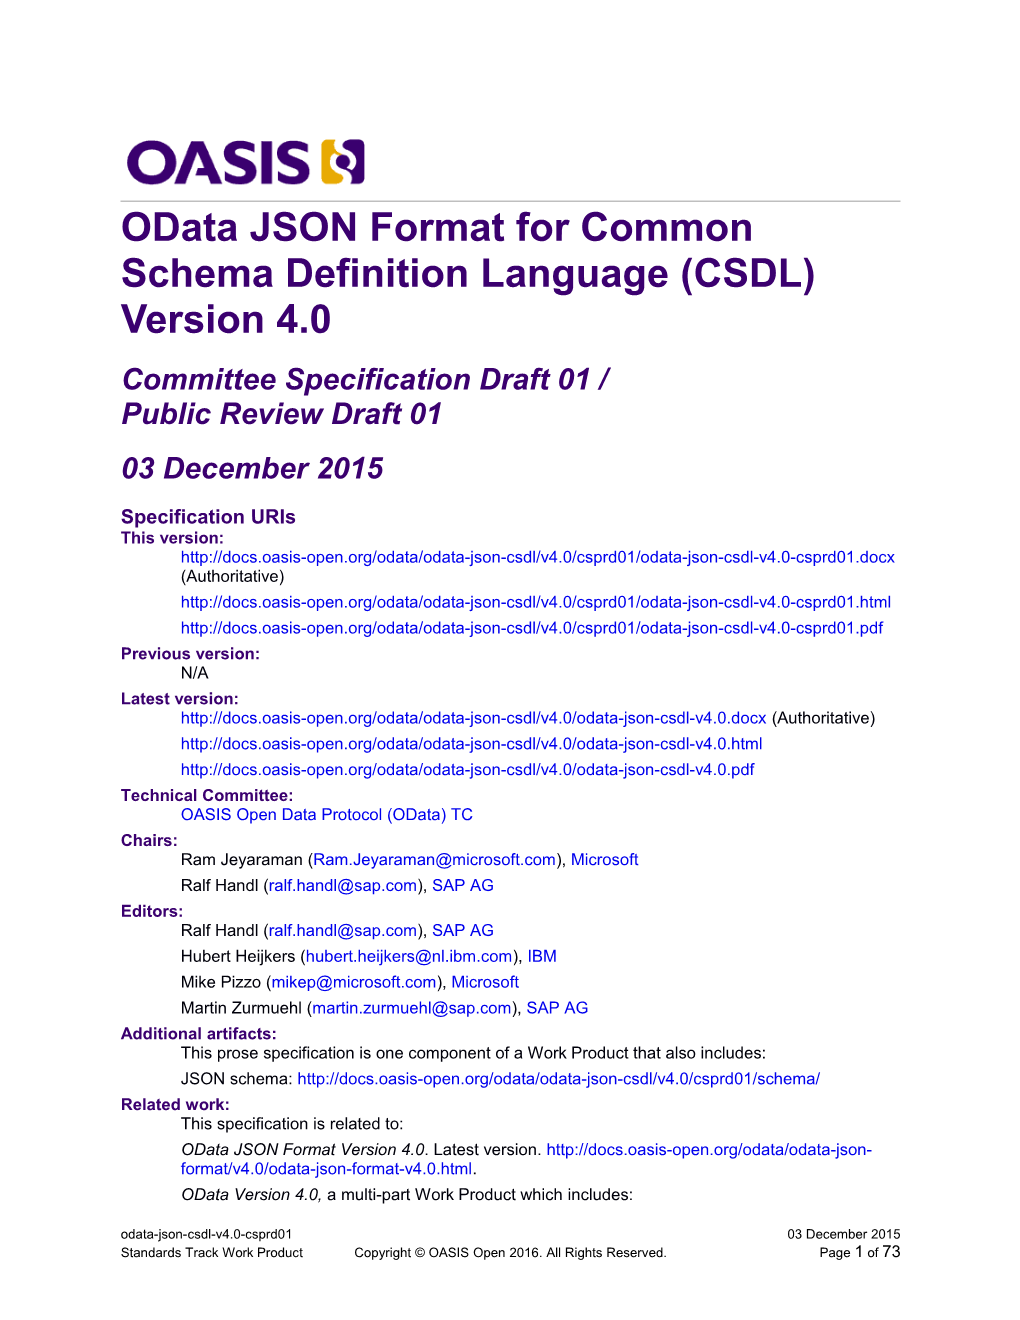 Odata JSON Format for Common Schema Definition Language (CSDL) Version 4.0